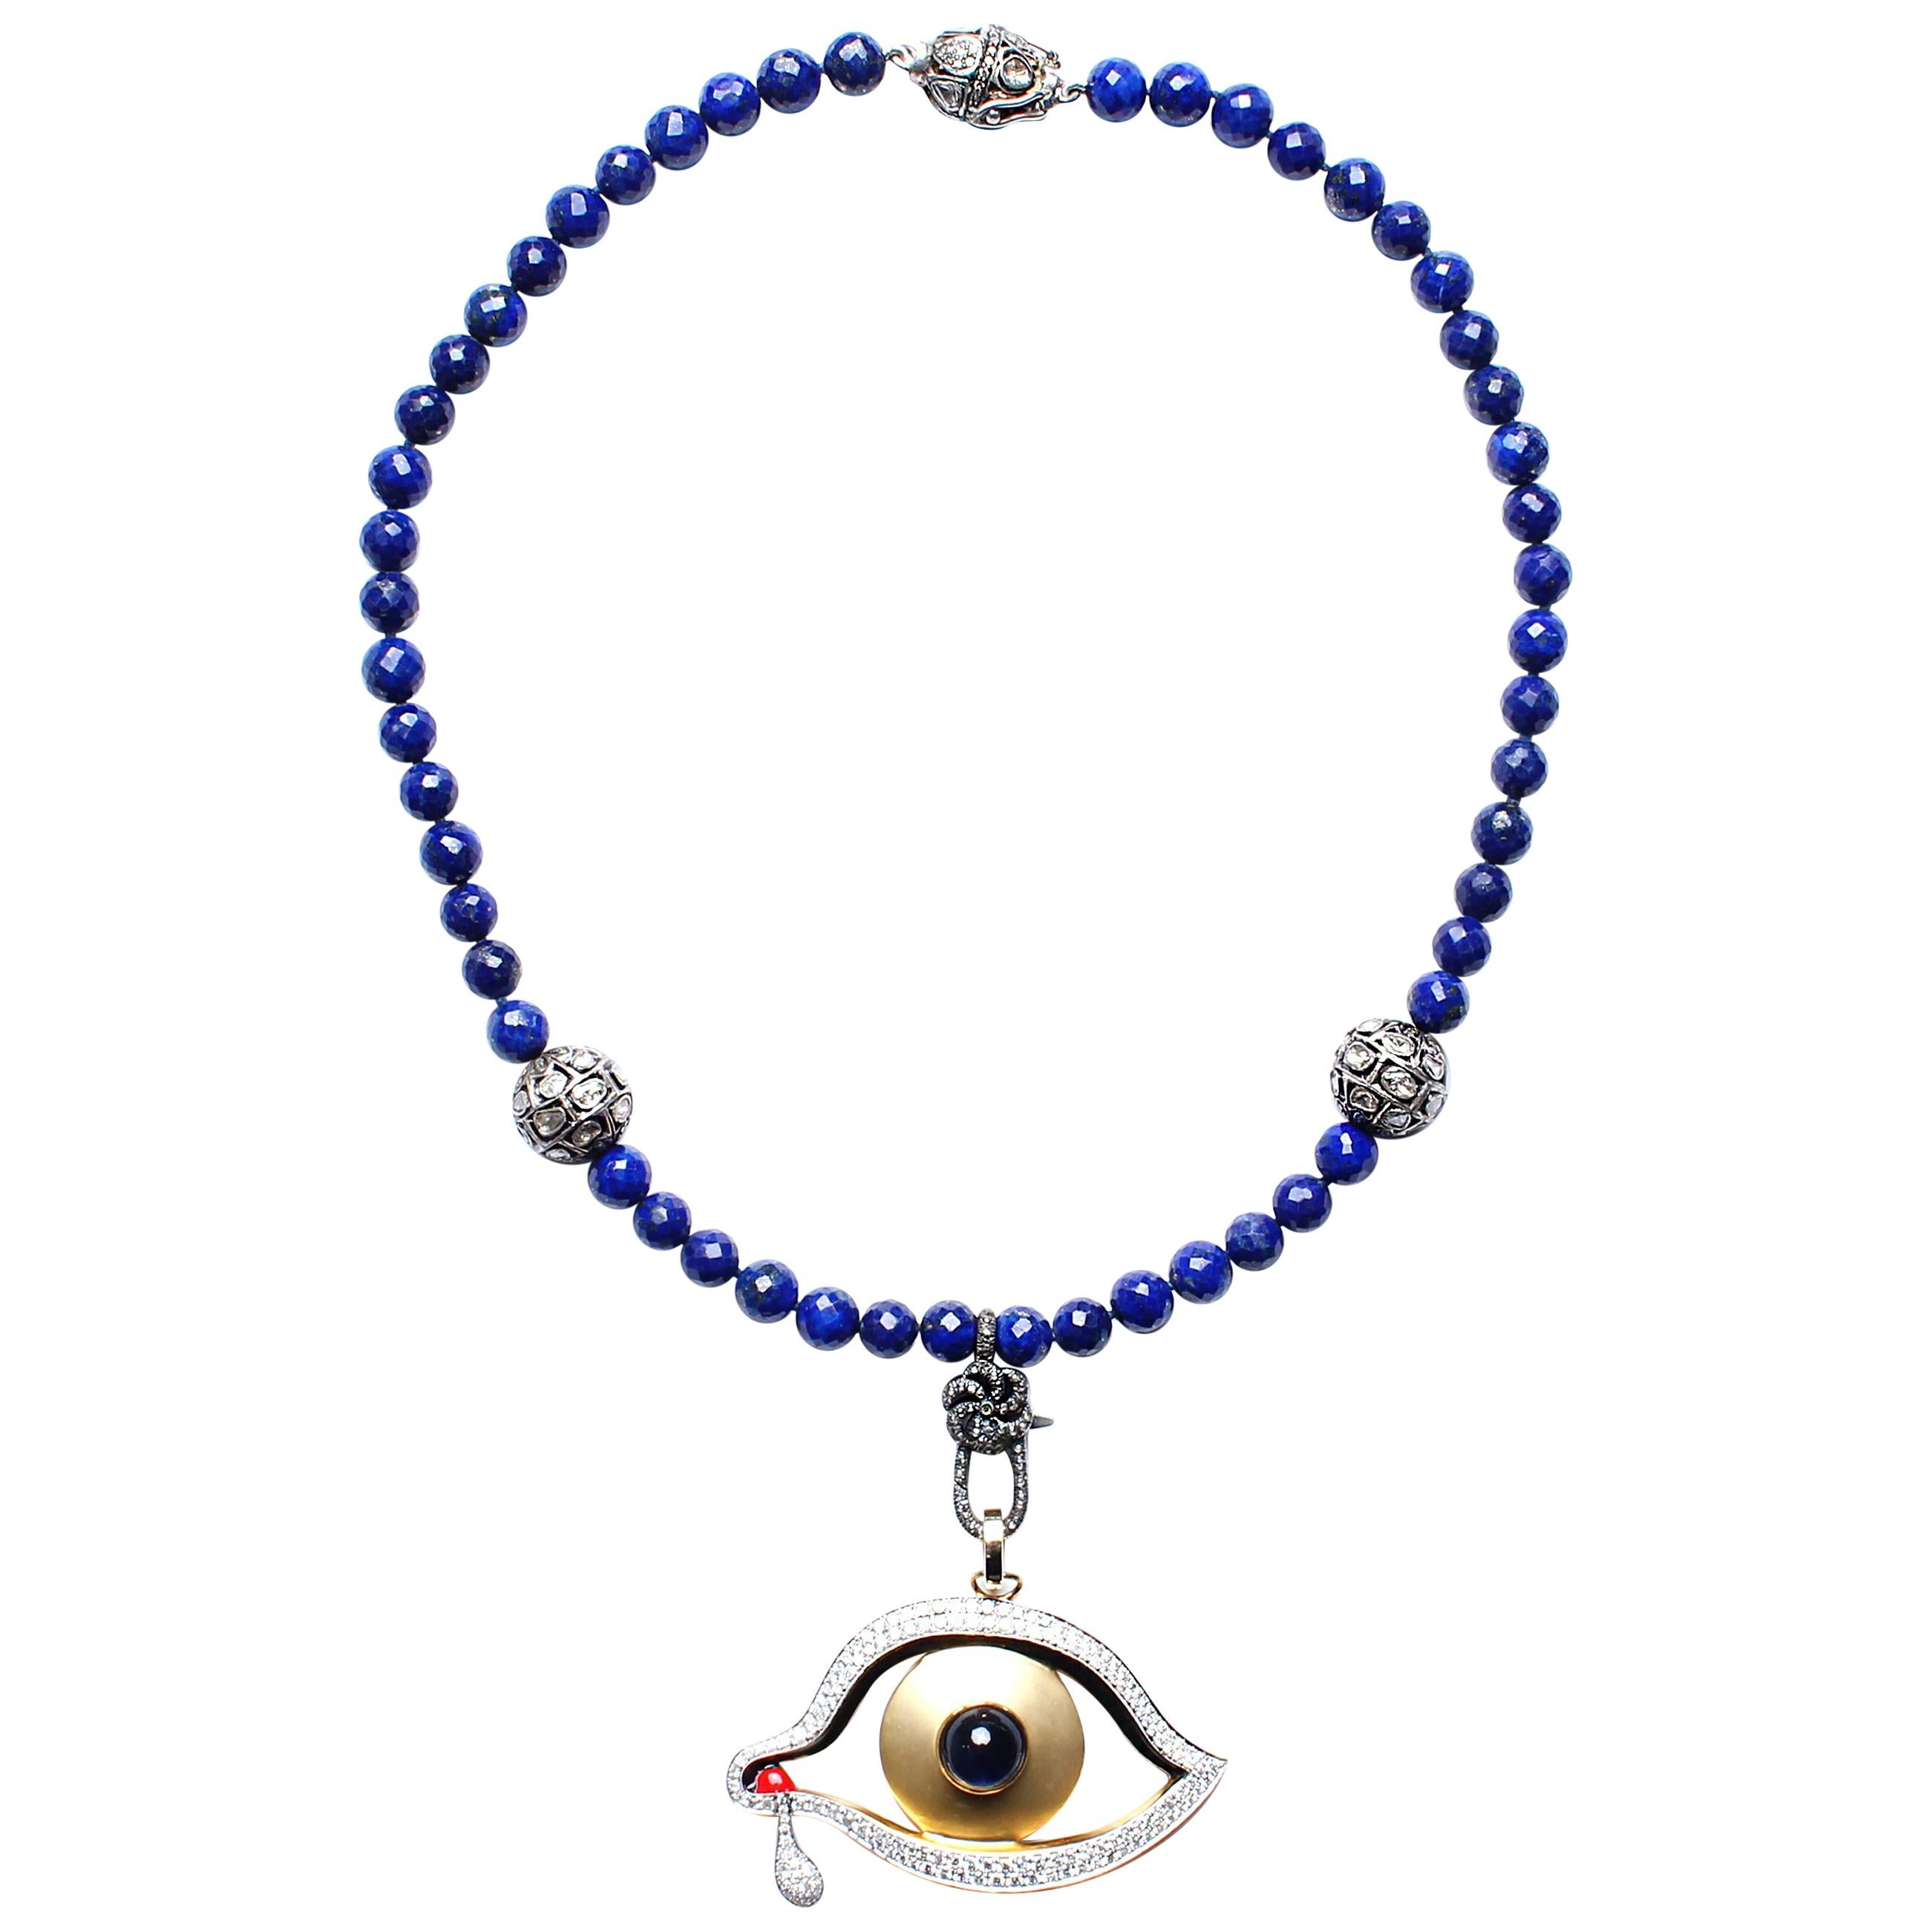 Clarissa Bronfman Lapis, Diamond, Gold, Enamel Dali's Eye Beaded Necklace